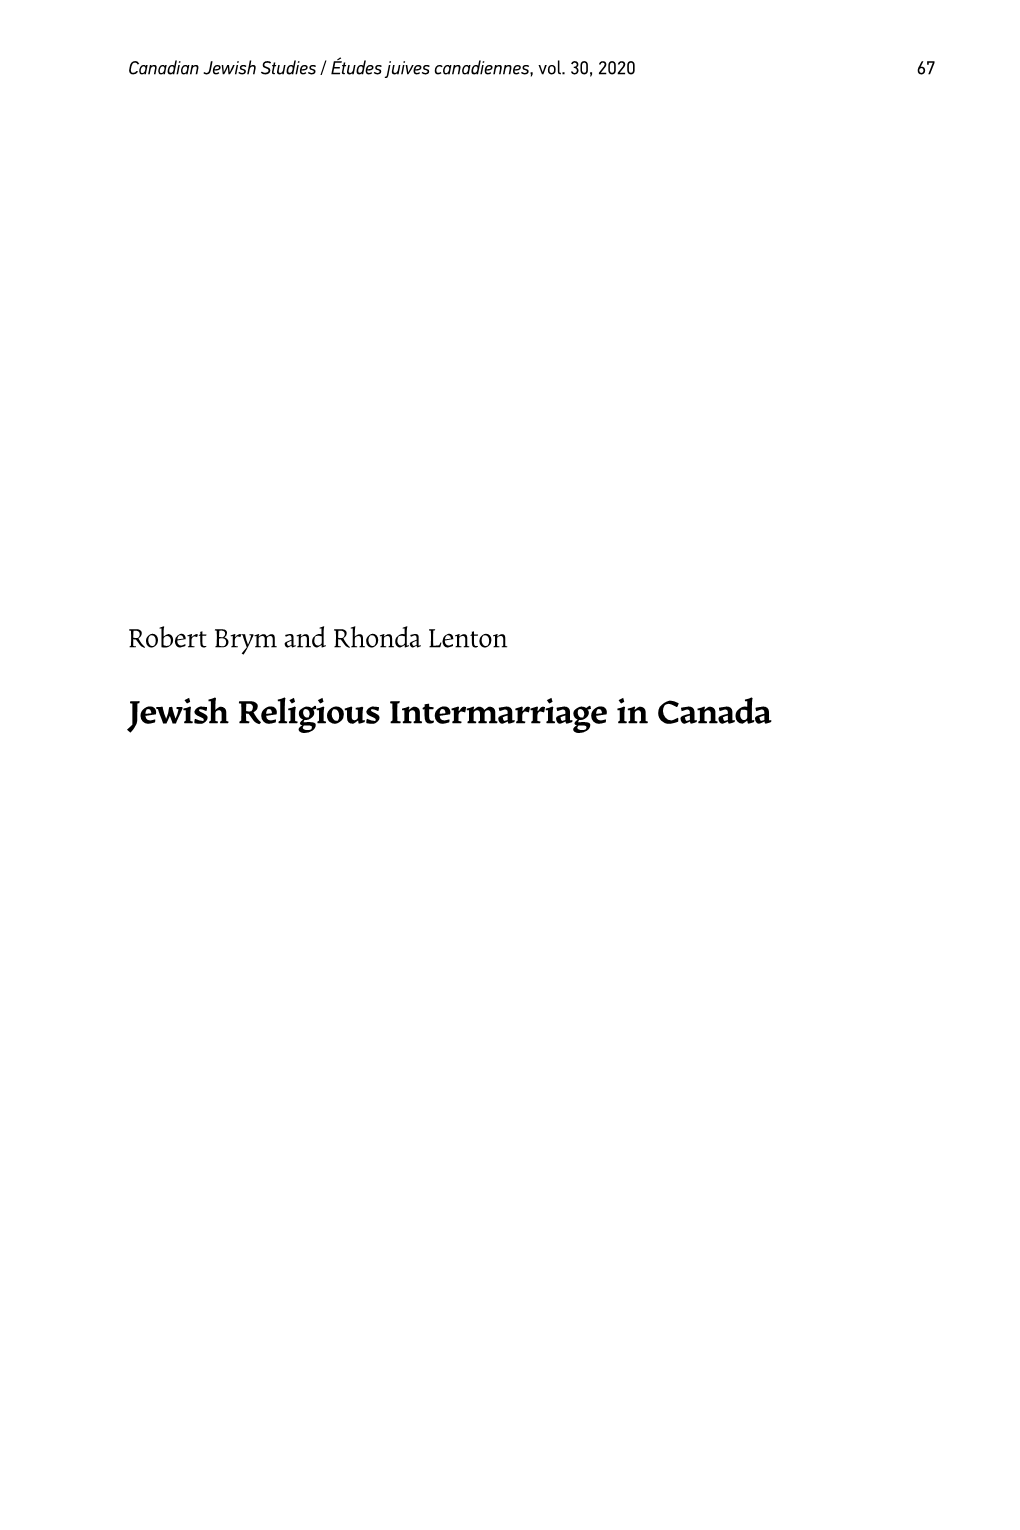 Jewish Religious Intermarriage in Canada 68 Robert Brym and Rhonda Lenton / Jewish Religious Intermarriage in Canada